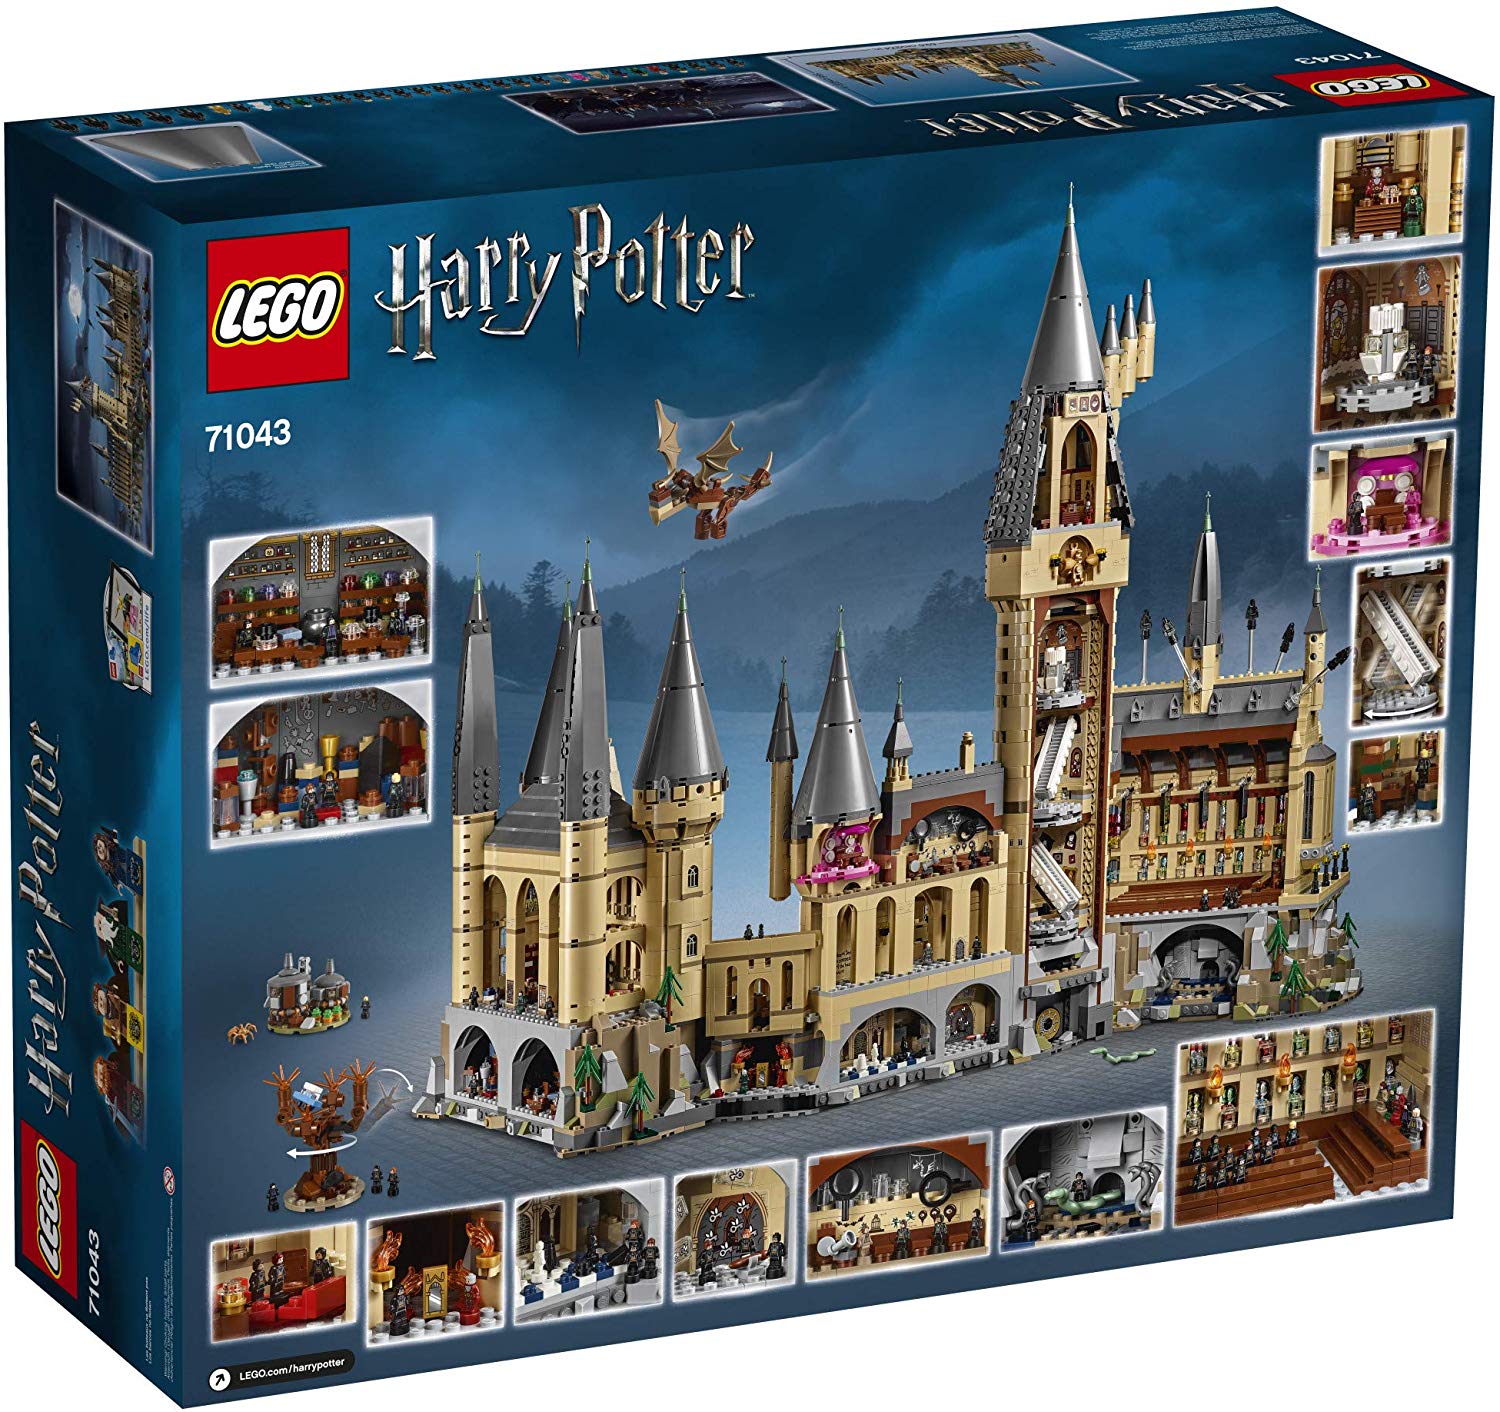 LEGO Harry Potter Hogwarts Castle 71043 Building Kit, 2019 (6020 P...